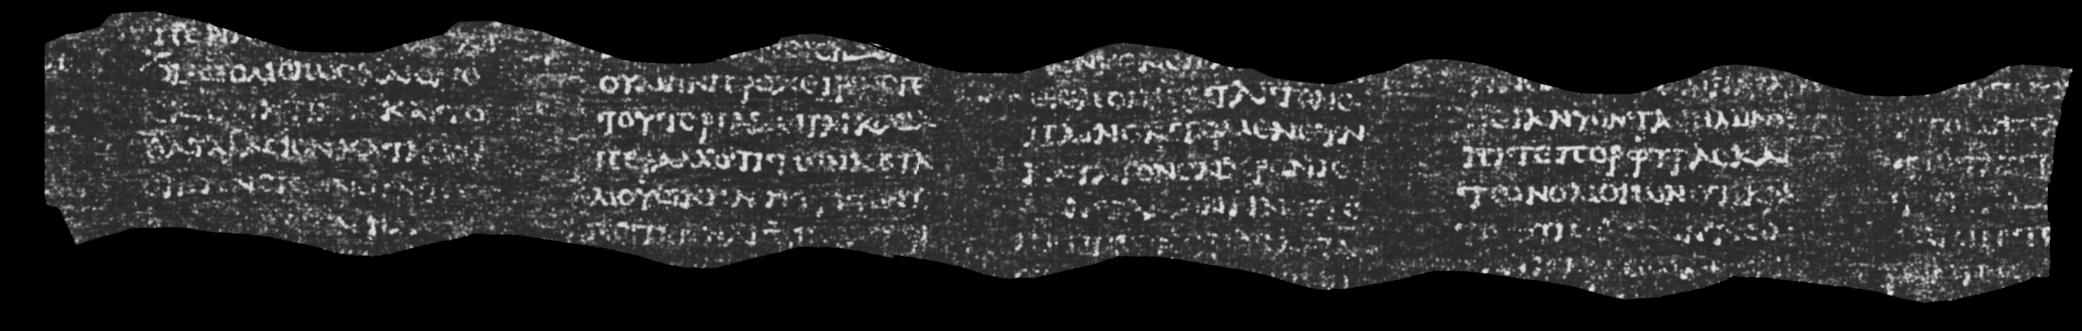 Herculaneum papyri image Youssef Nader